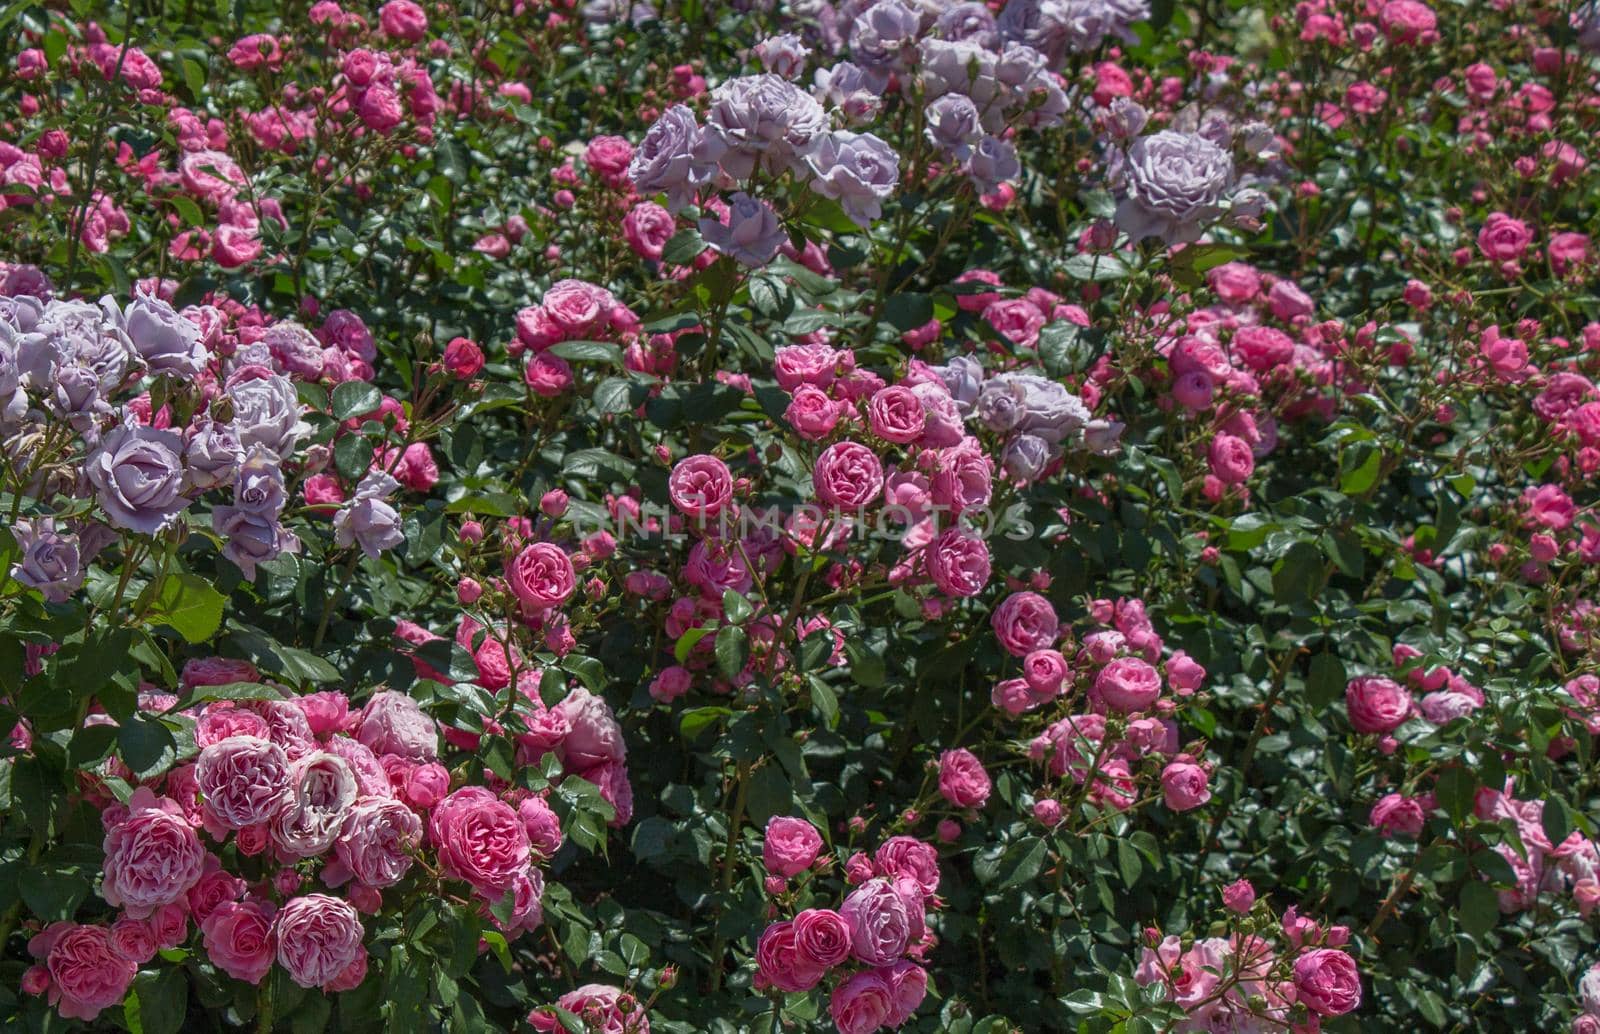 Rose garden with beautiful fresh roses by berkay